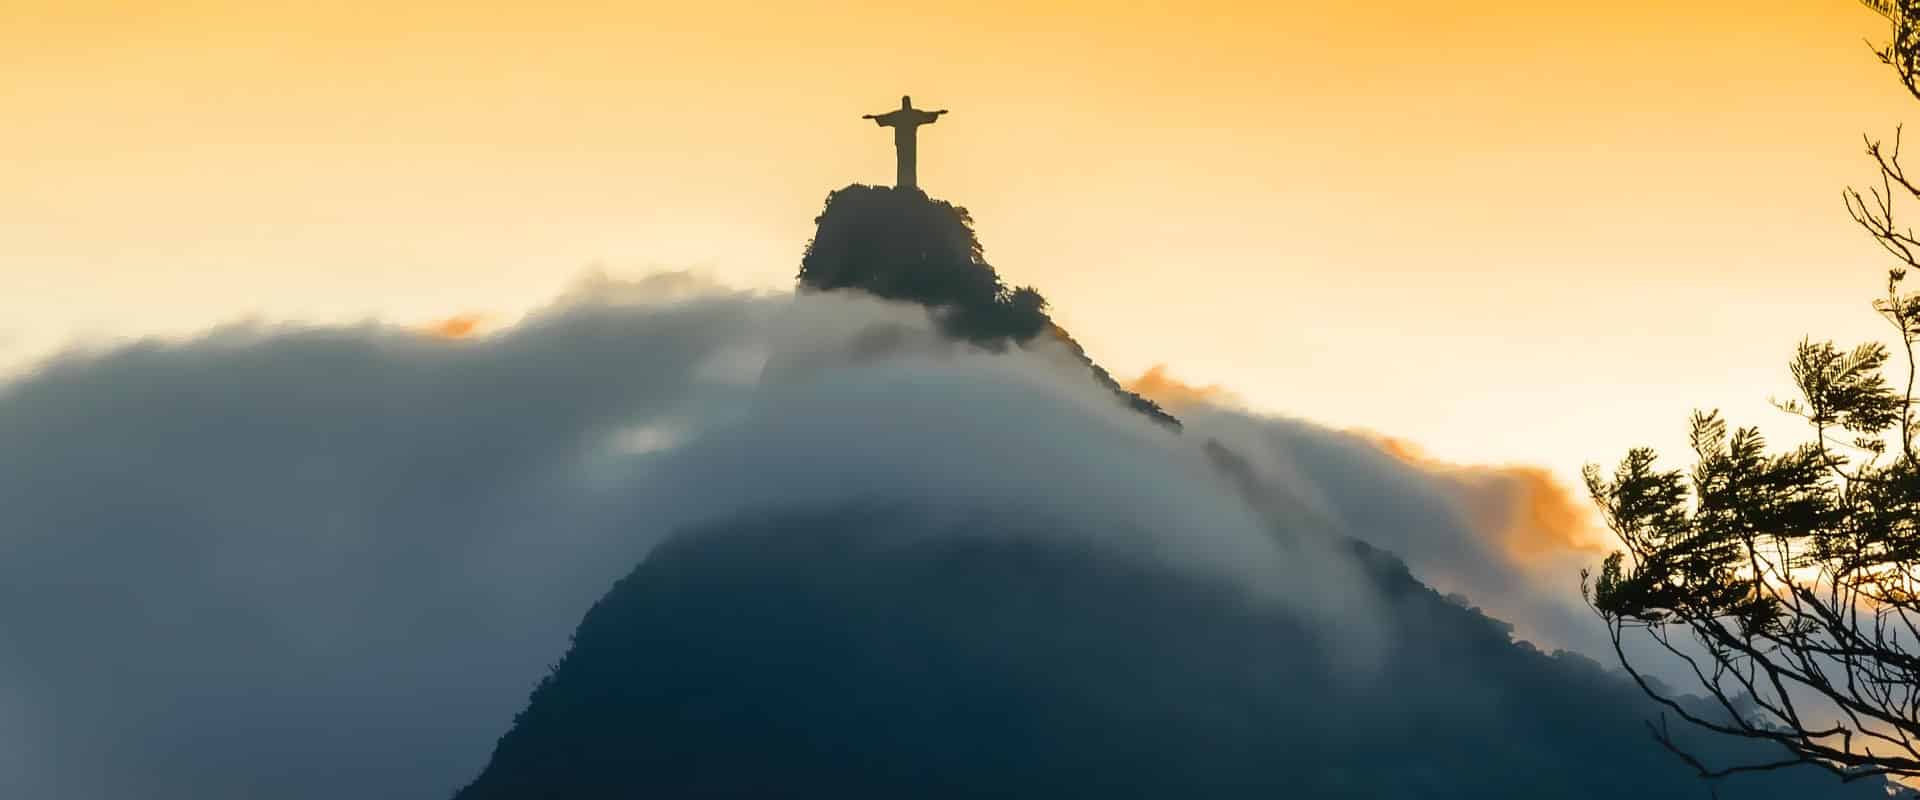 Brazil holidays. Destination highlights and travel information